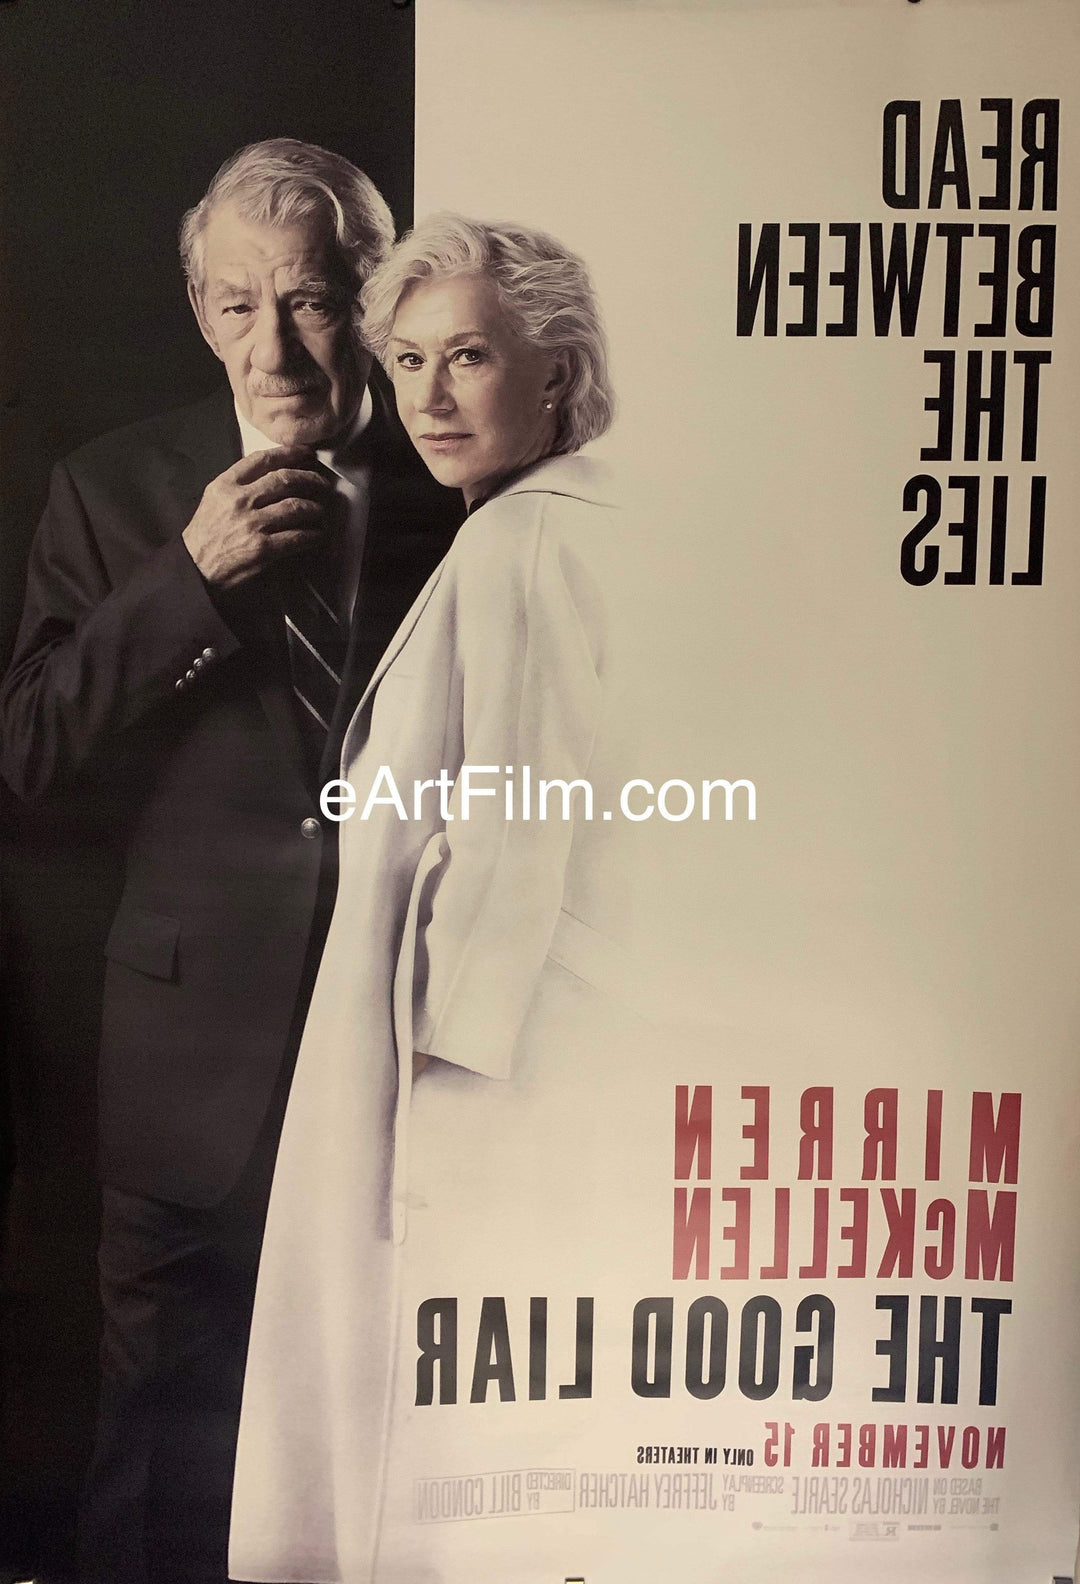 eArtFilm.com U.S Theatrical Release Bus Stop/Shelter Poster approx. 48"x72" Good Liar 2019 48x72 Helen Mirren  Ian McKellan con-man crime mystery